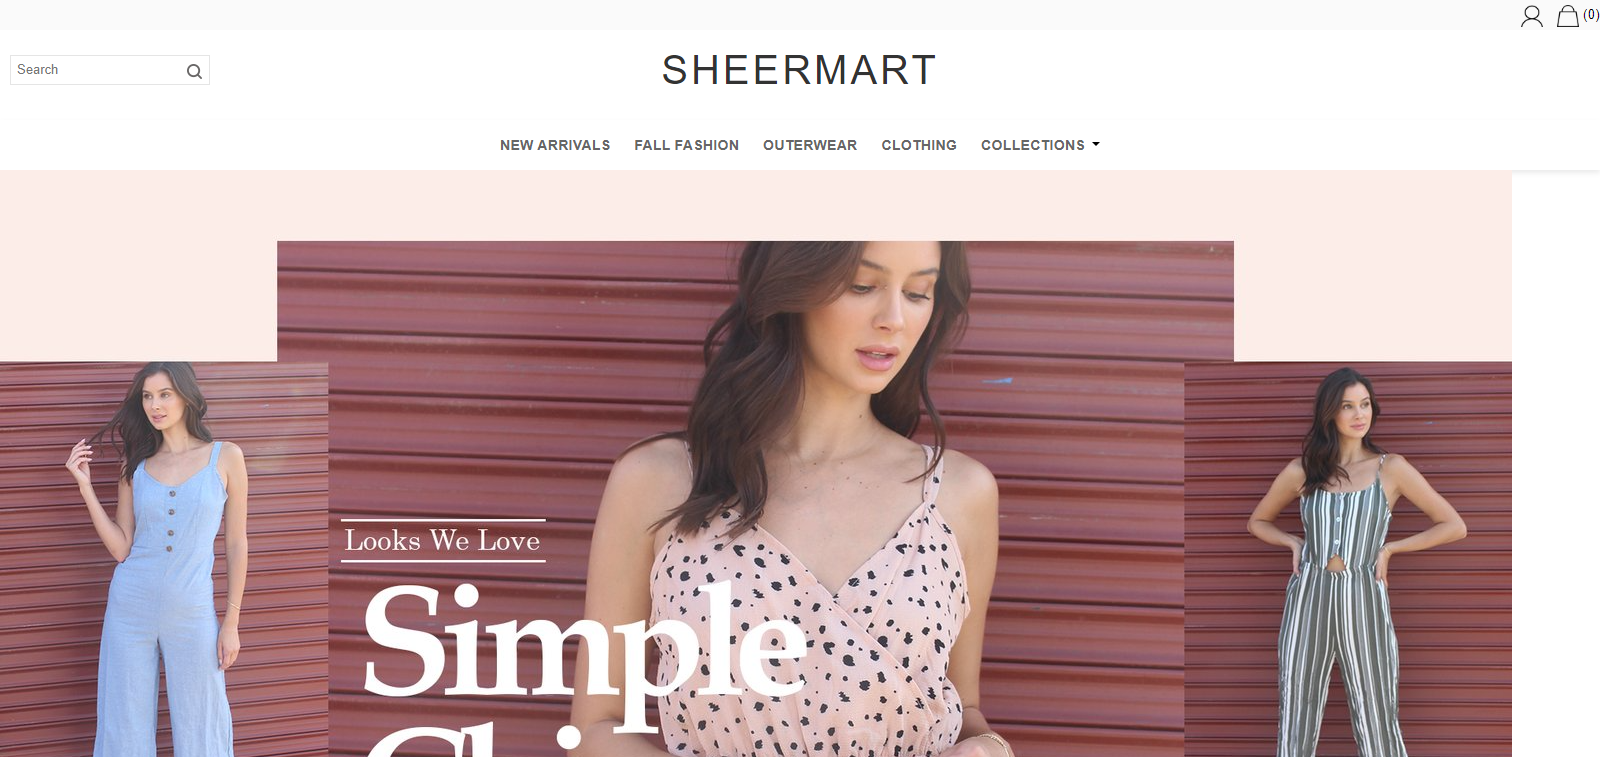 Sheermart homepage Image